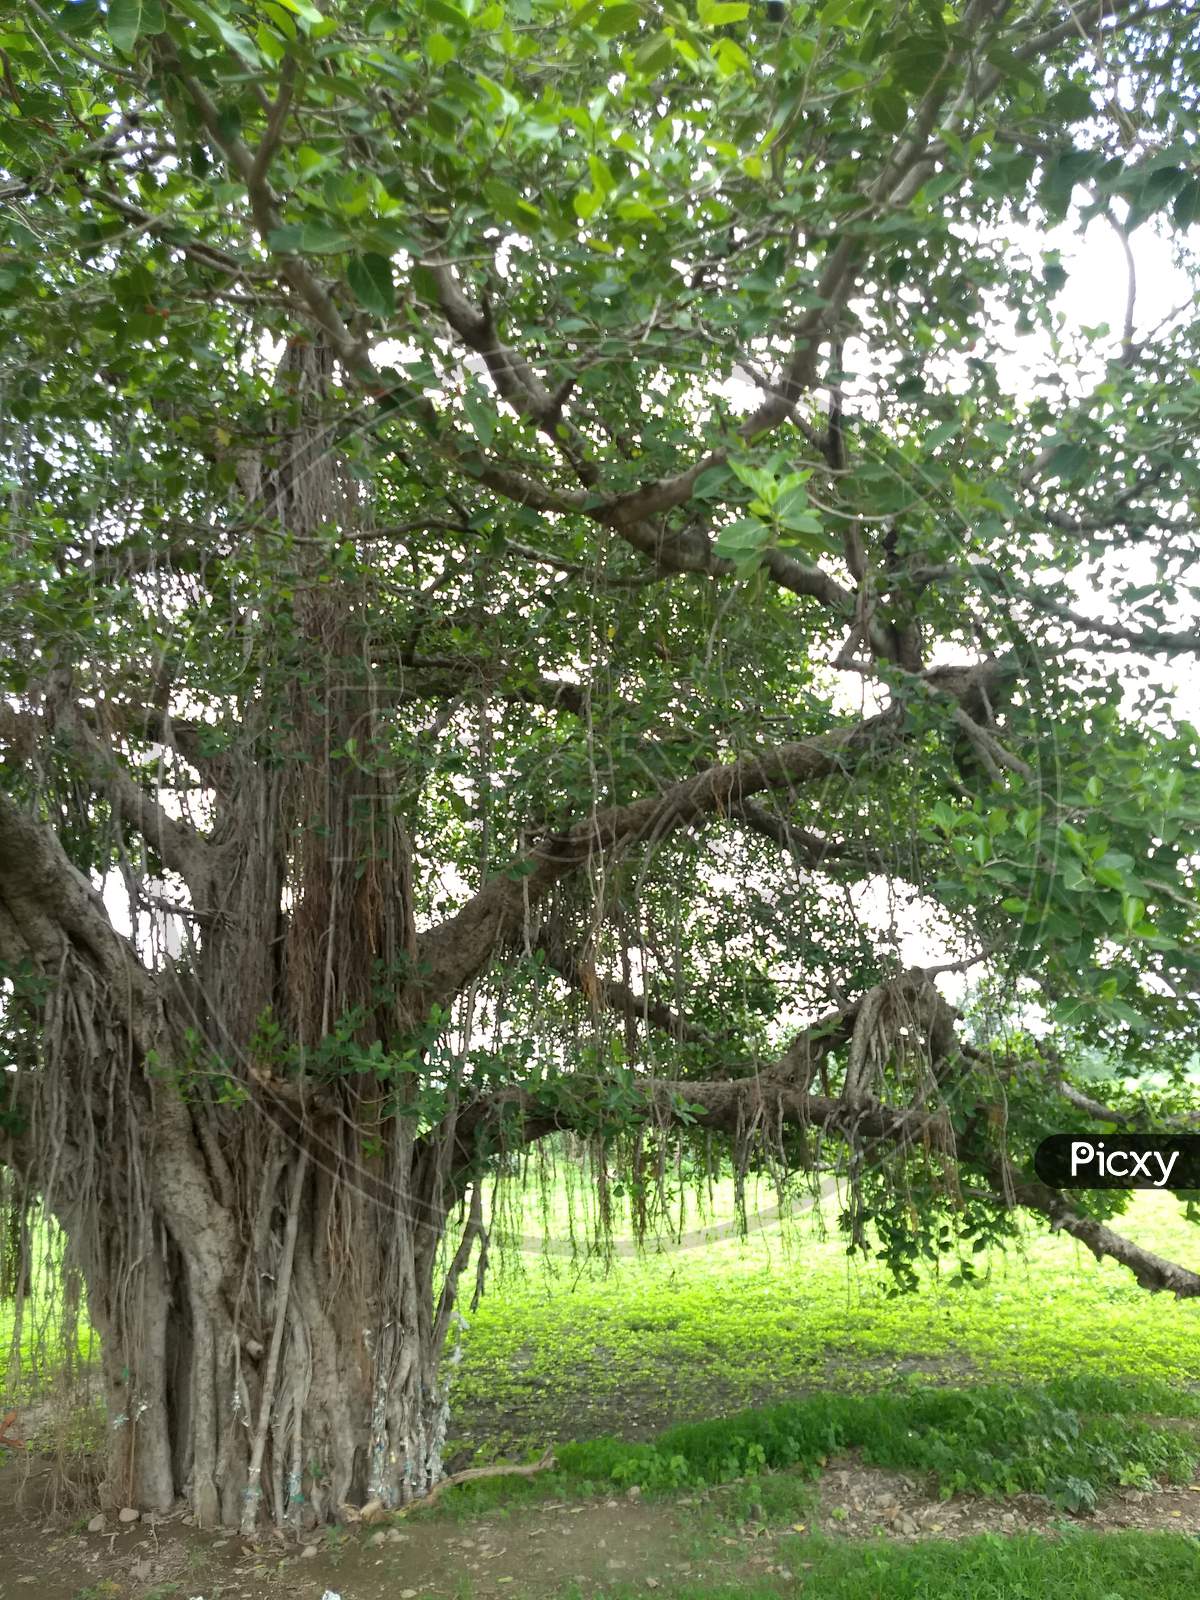 An old banyan tree